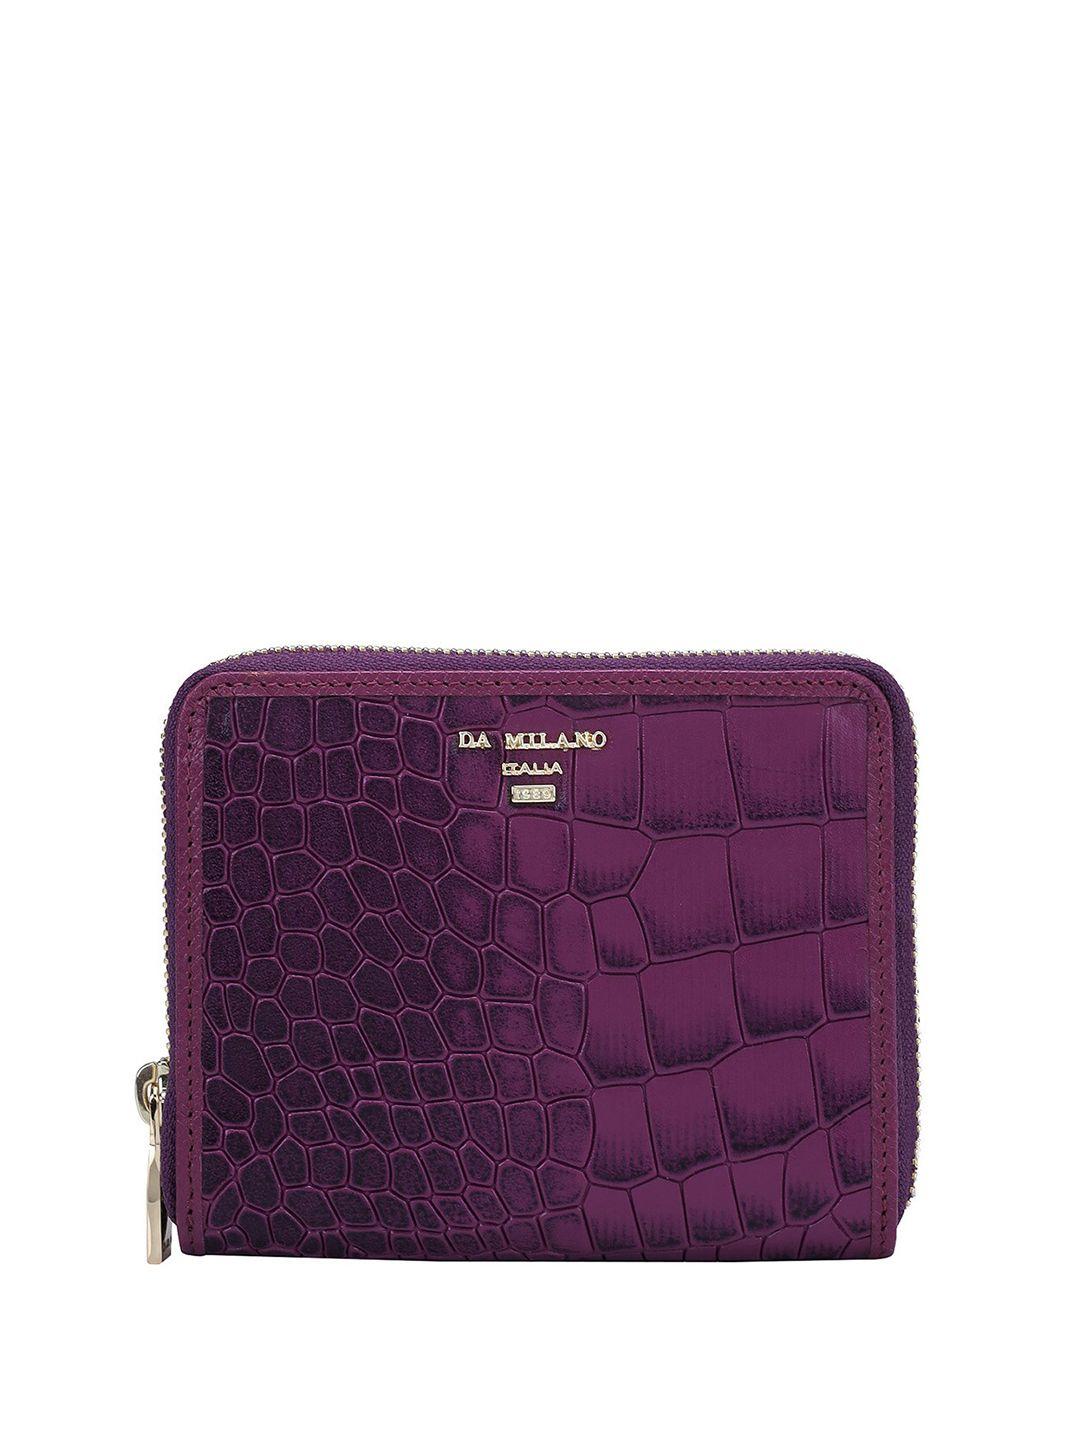 da milano women purple textured leather two fold wallet